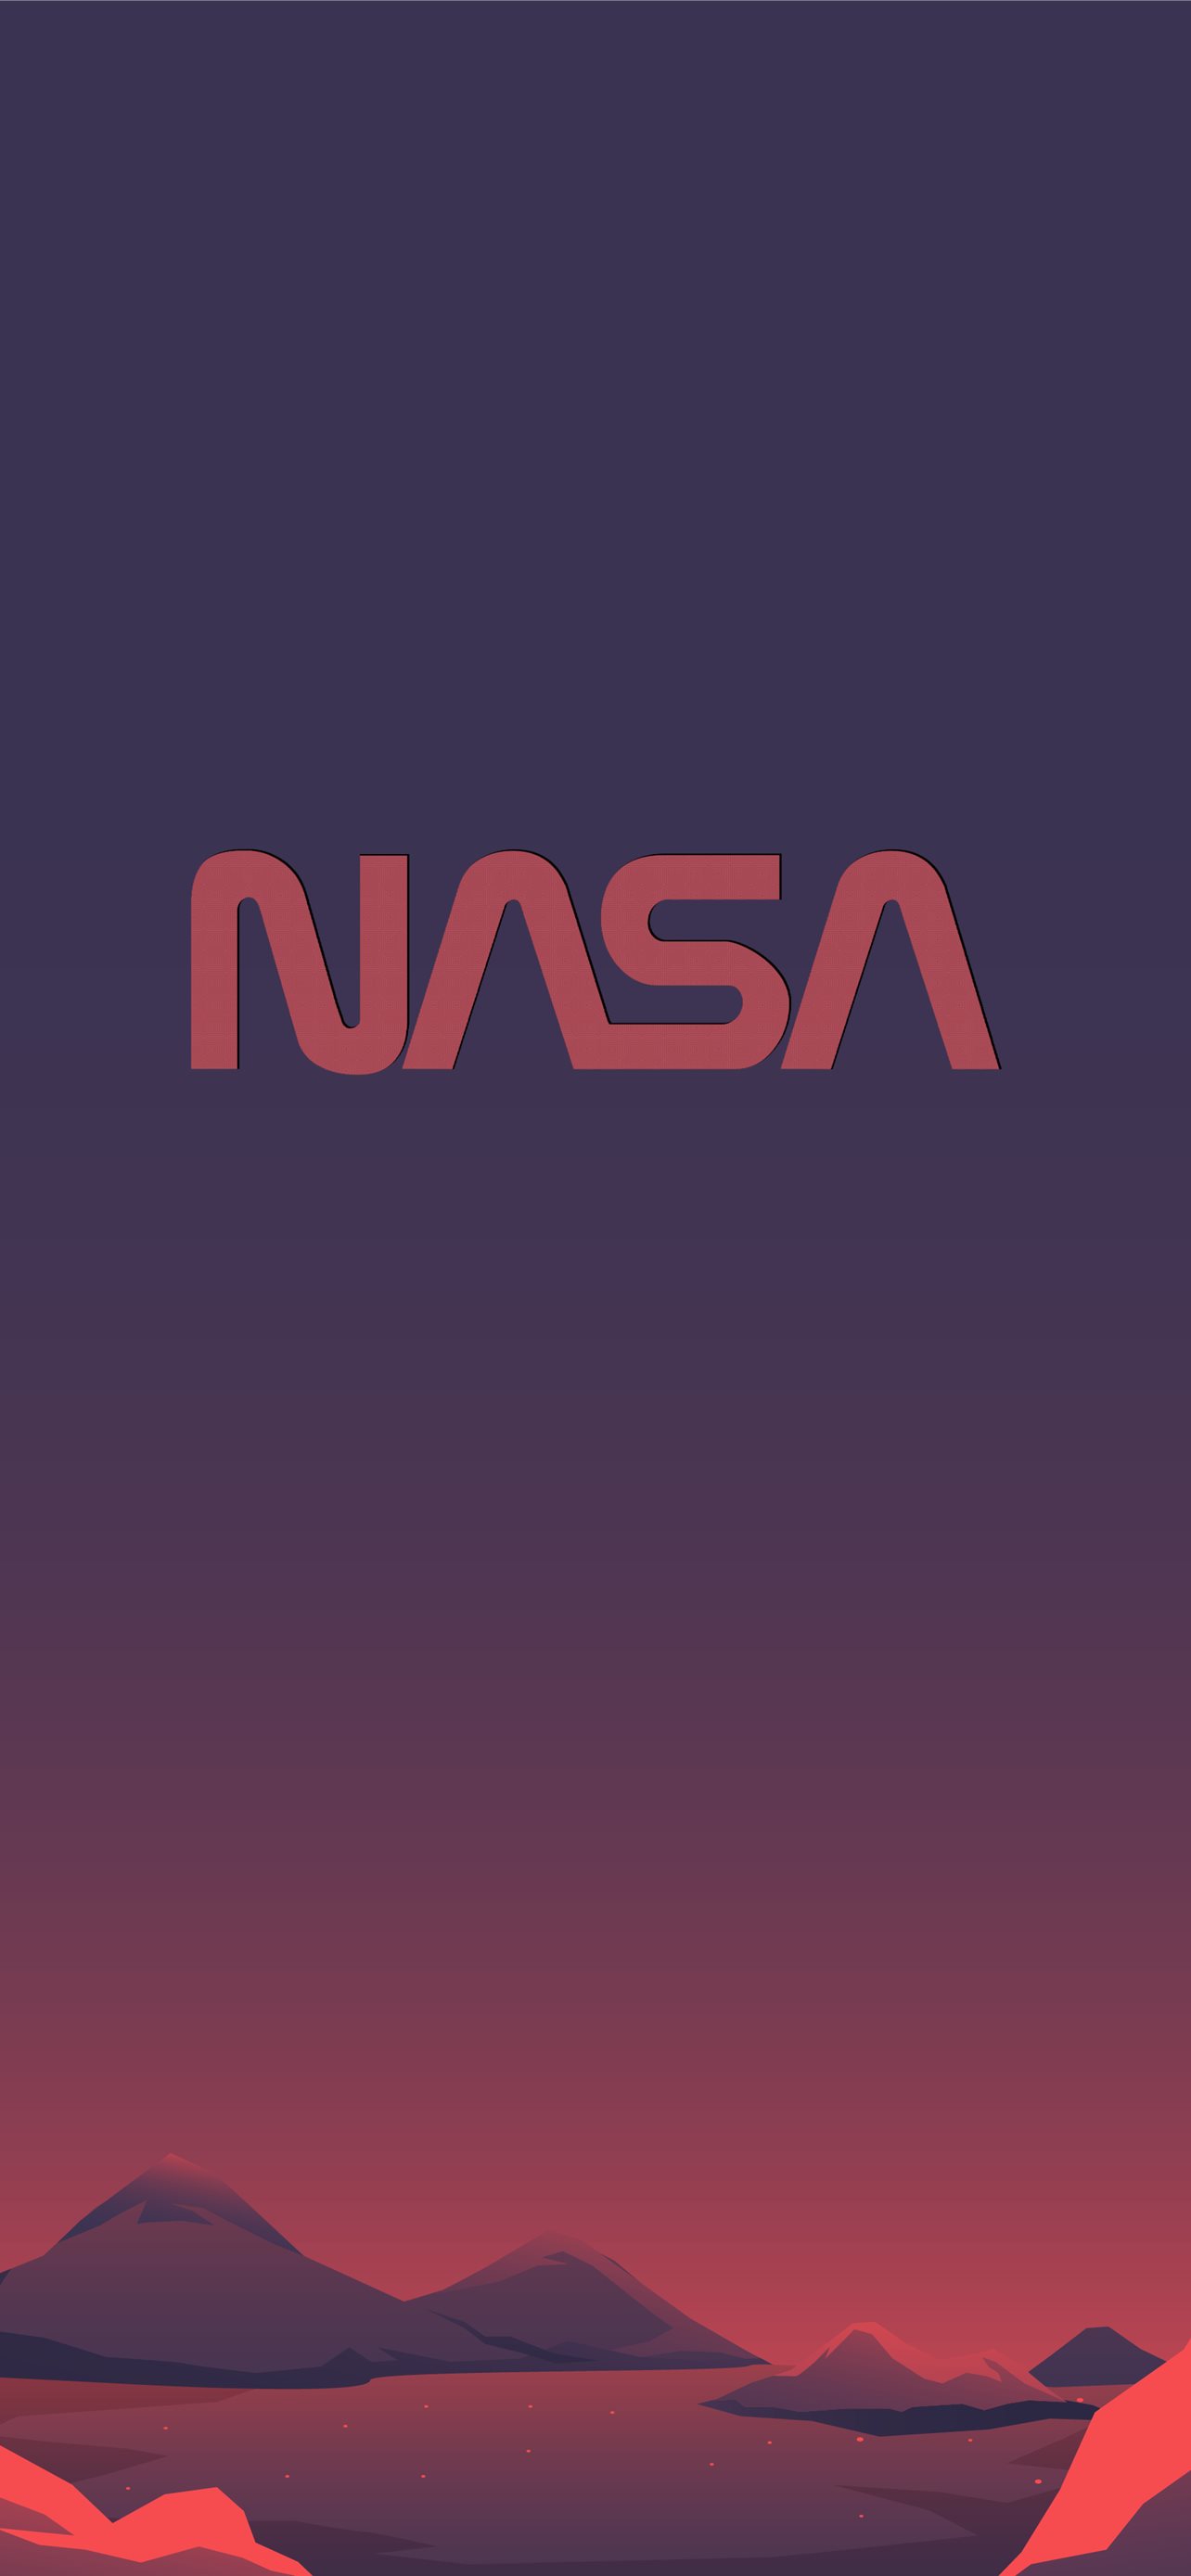 NASA 4K Cave iPhone Wallpapers Free Download